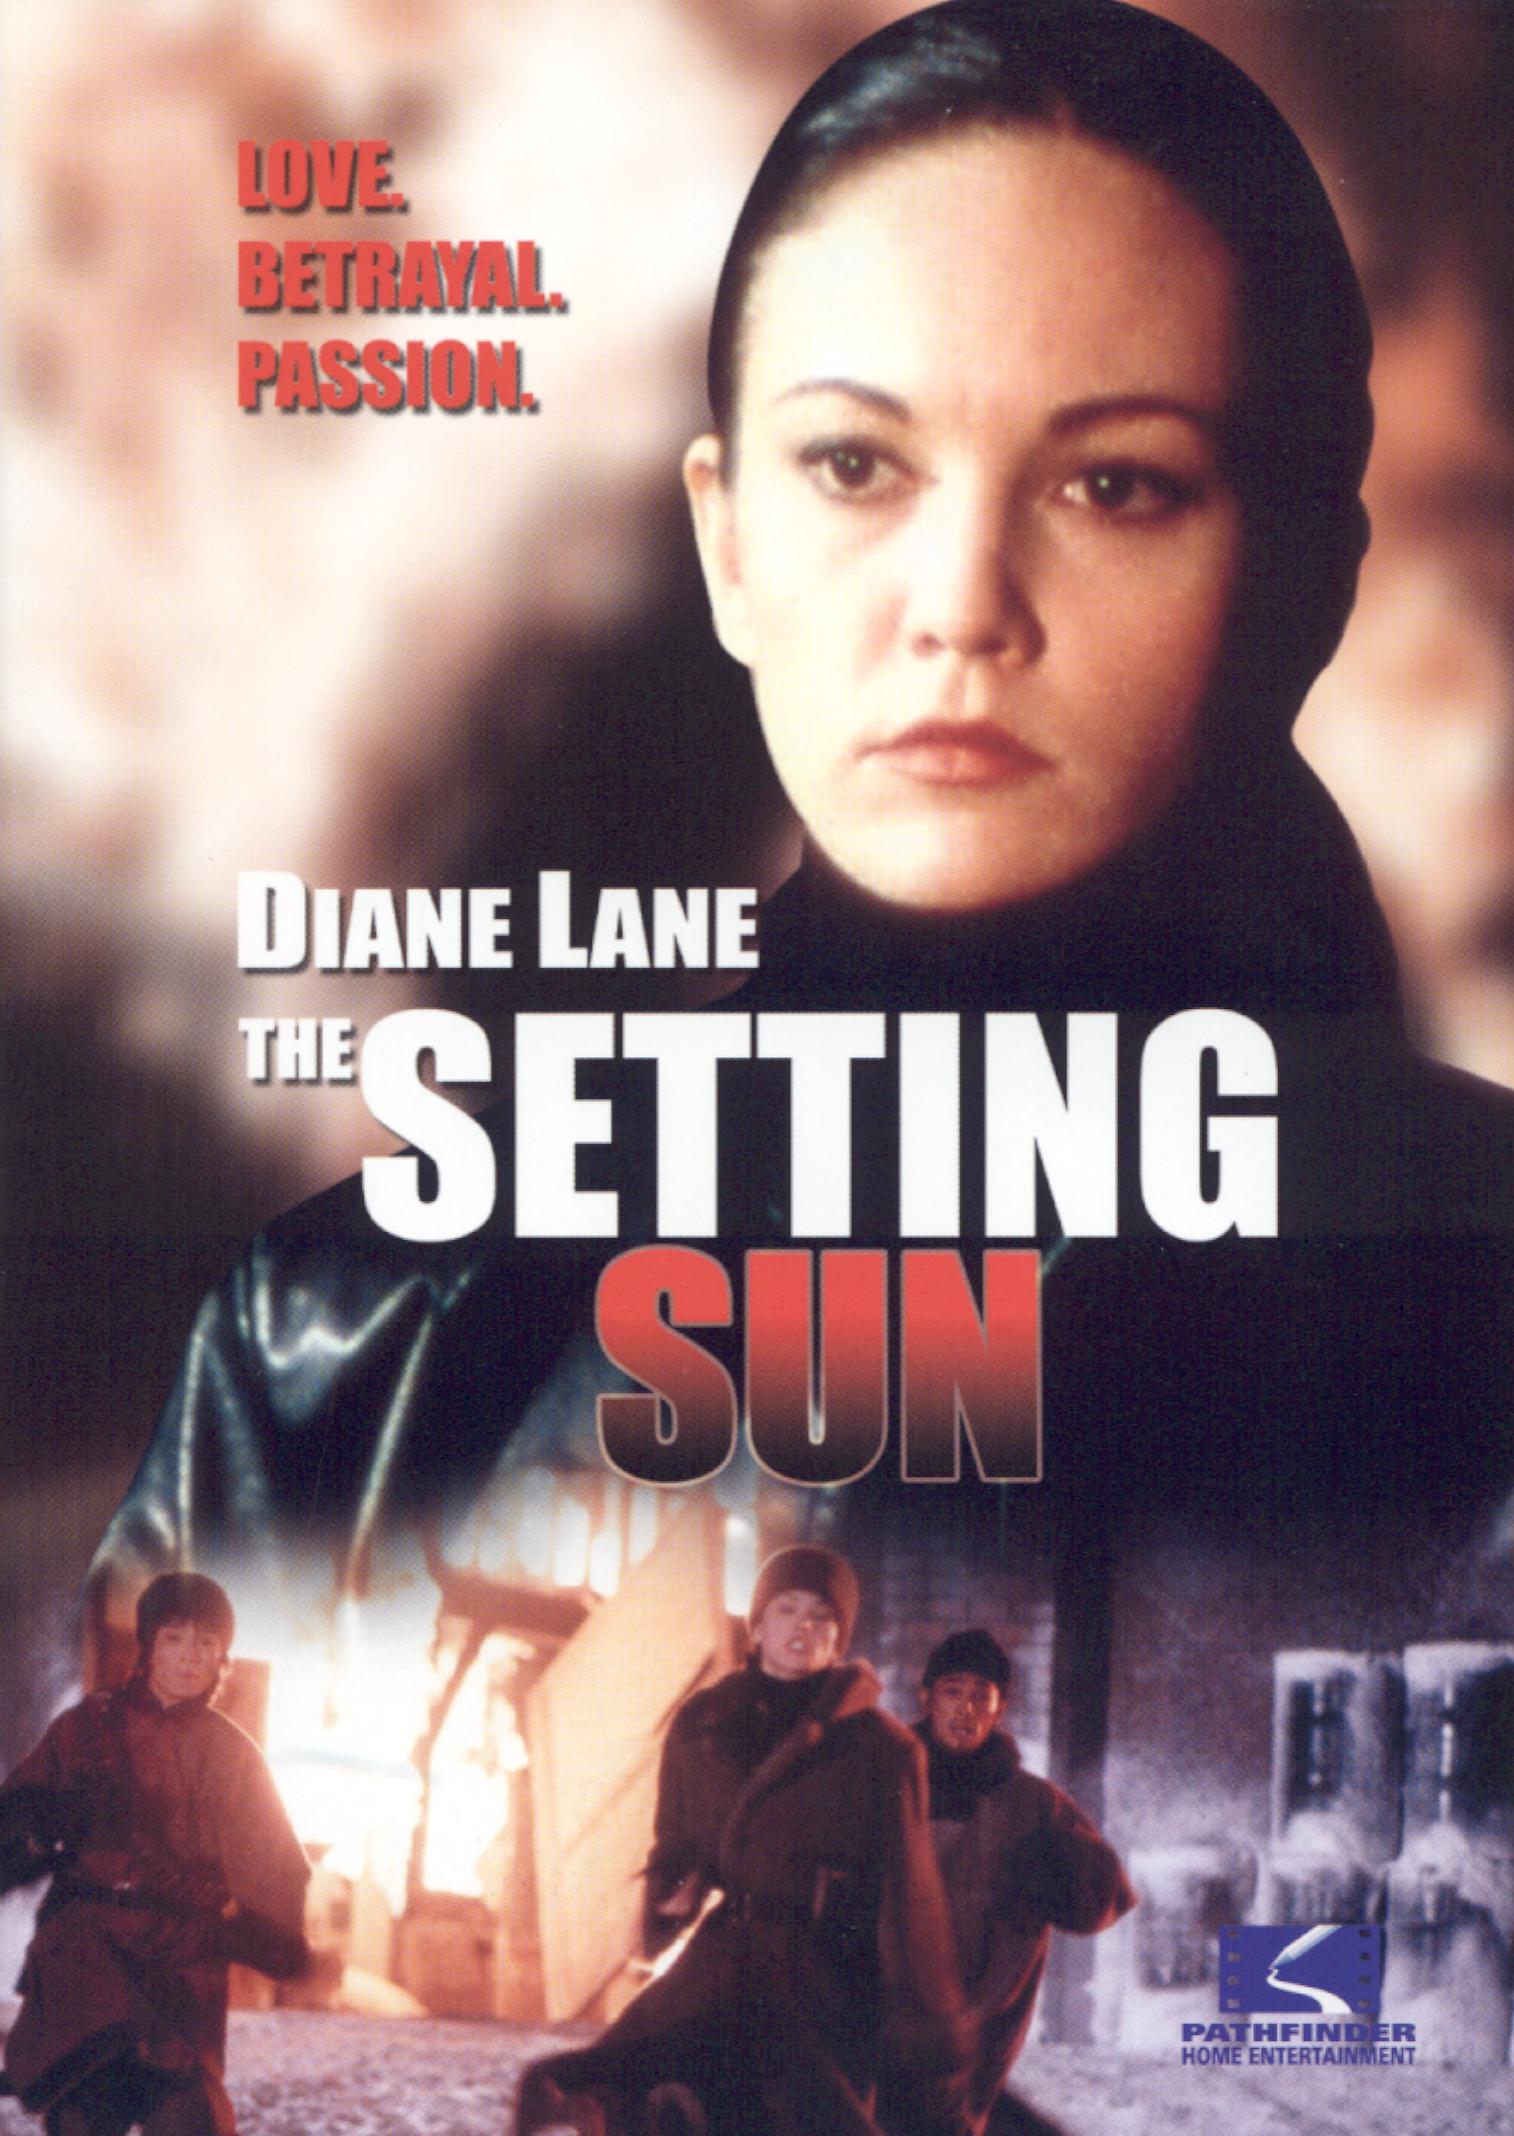 The Setting Sun (1992) - Ro Tomono | Synopsis, Characteristics, Moods ...